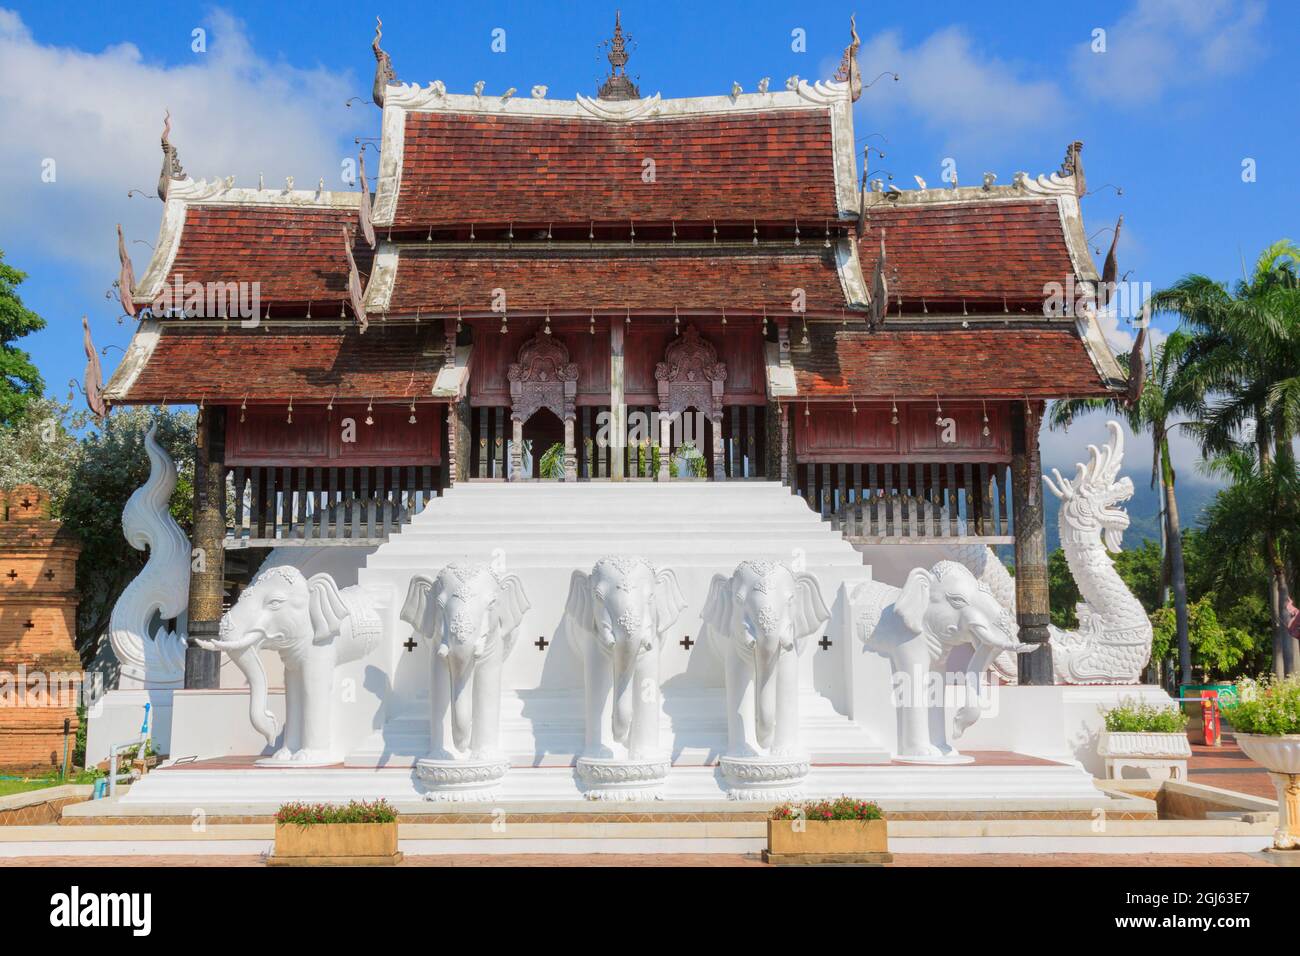 Thailand. Royal Park Ratchaphruek. Temple with white elephants and ...